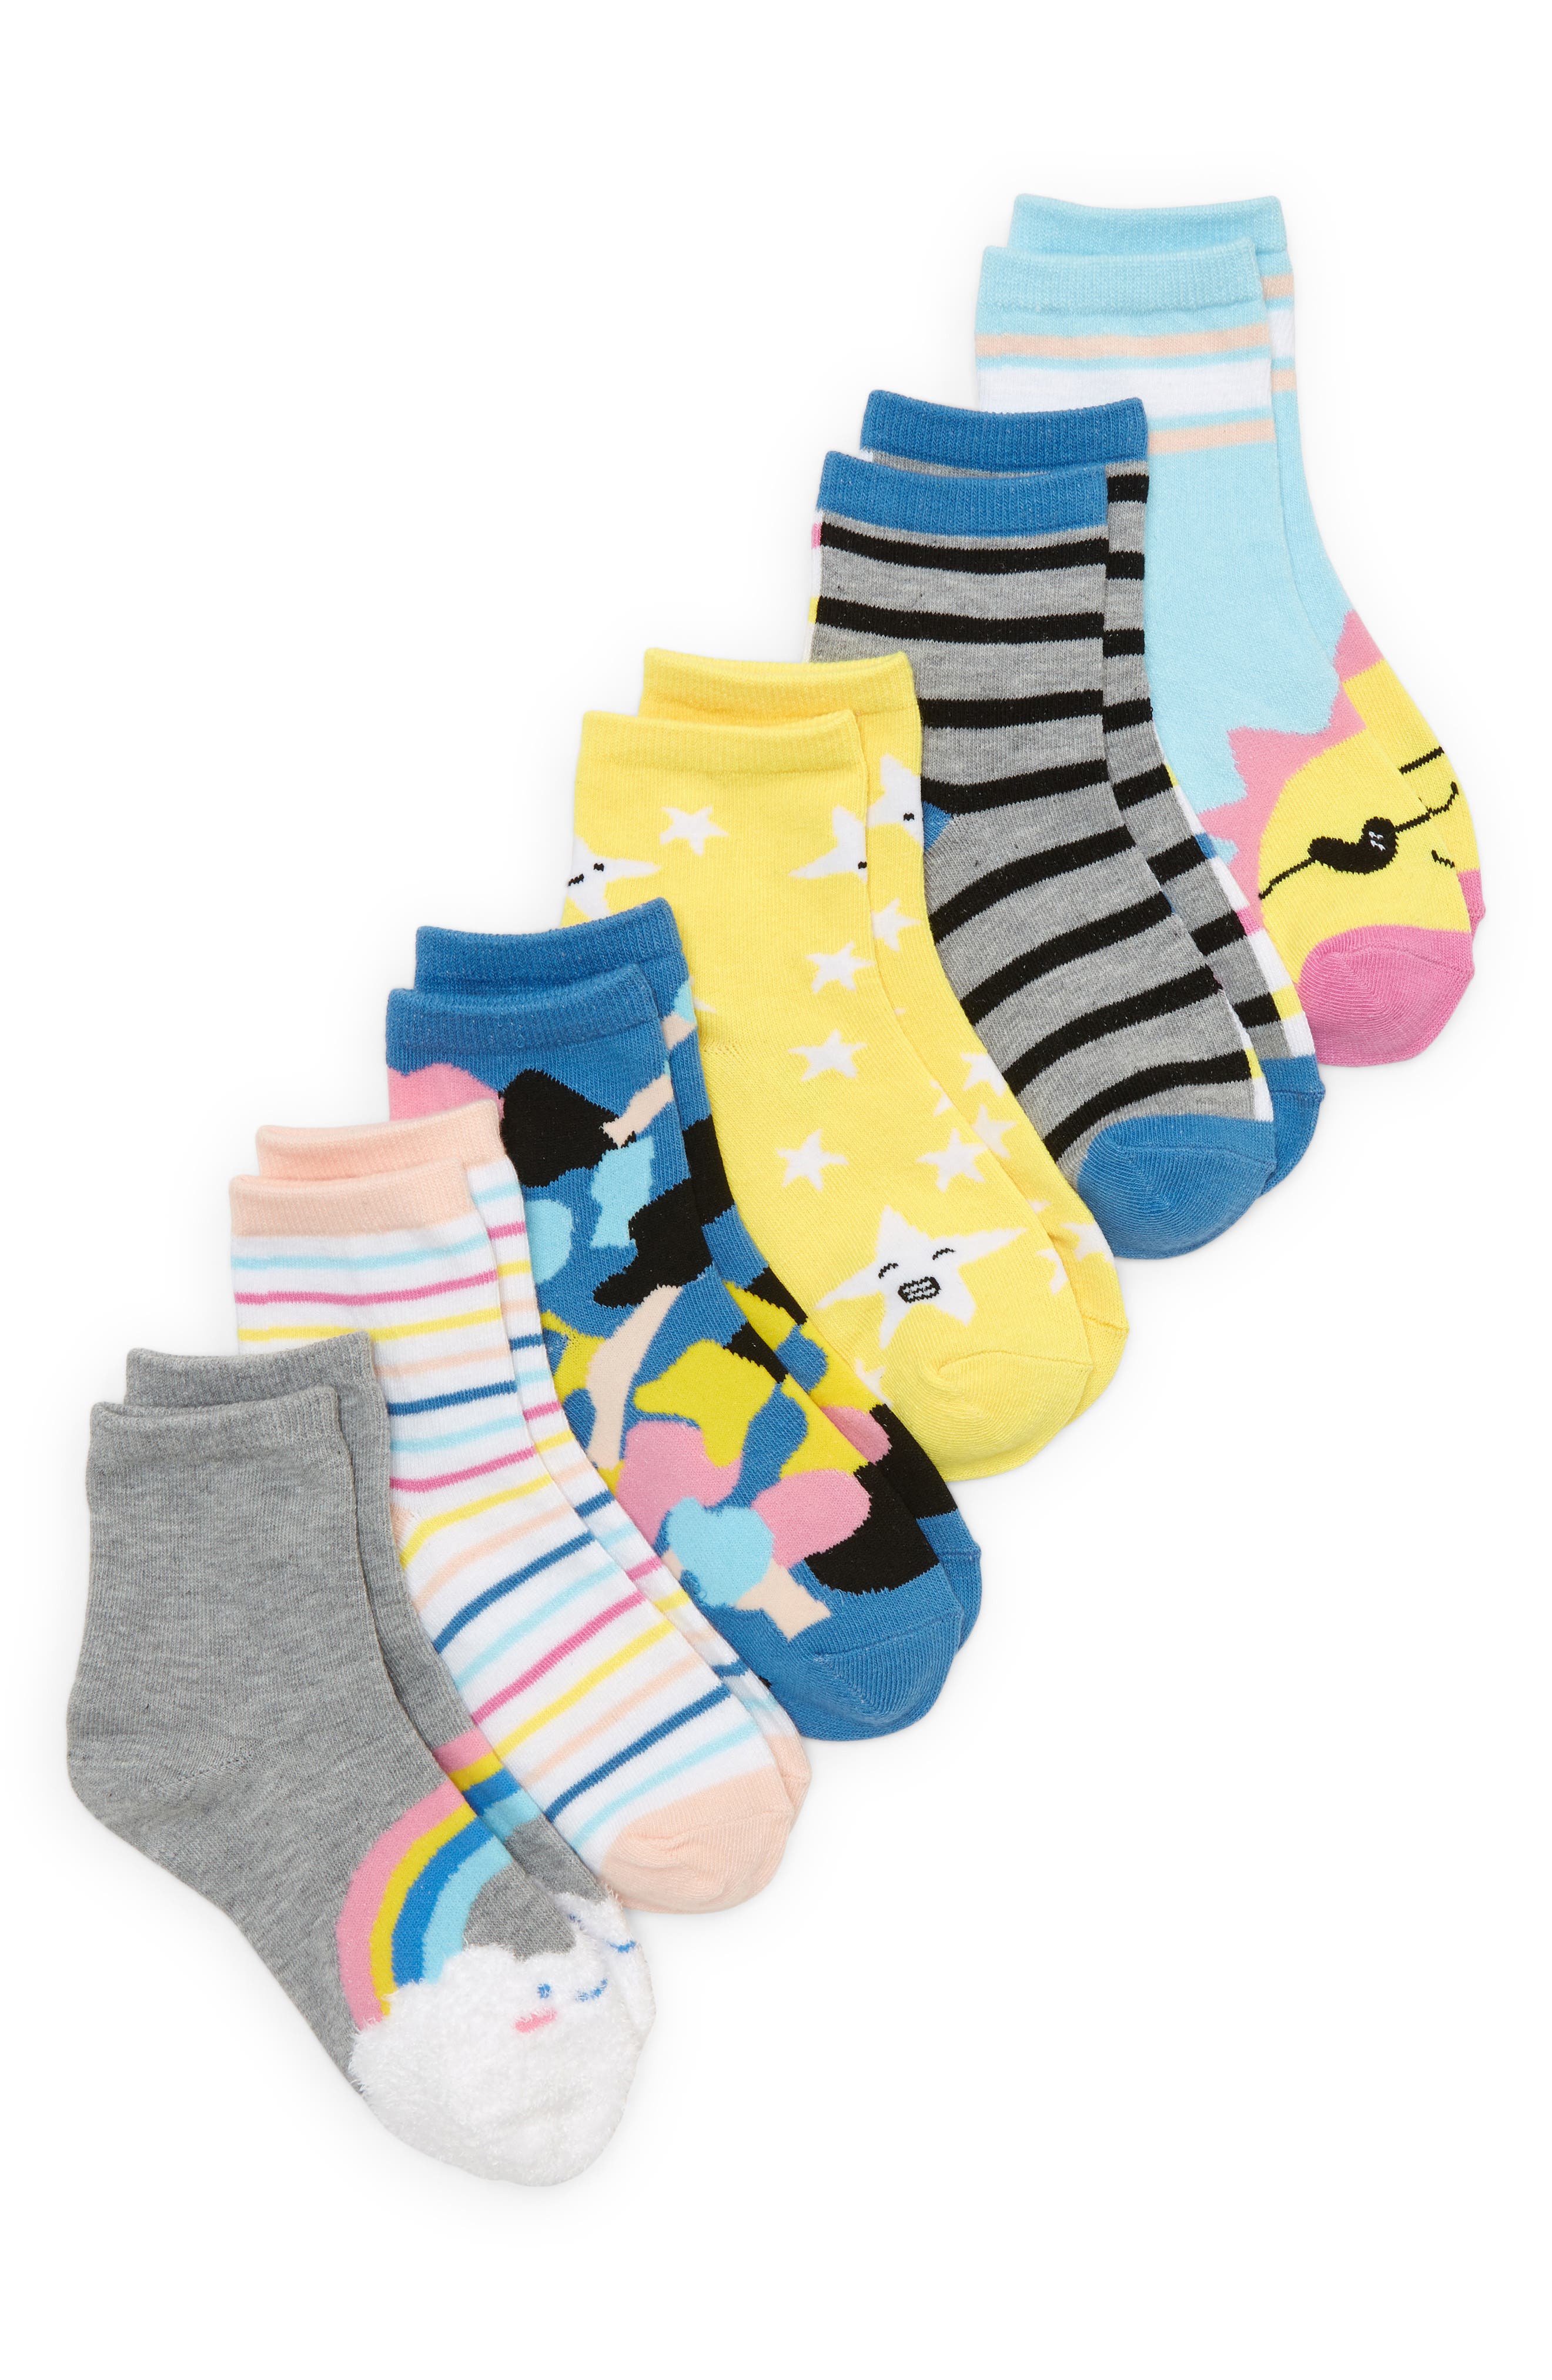 Happy Socks Boys and Girls Doughnut Cotton Socks Pack of 1 